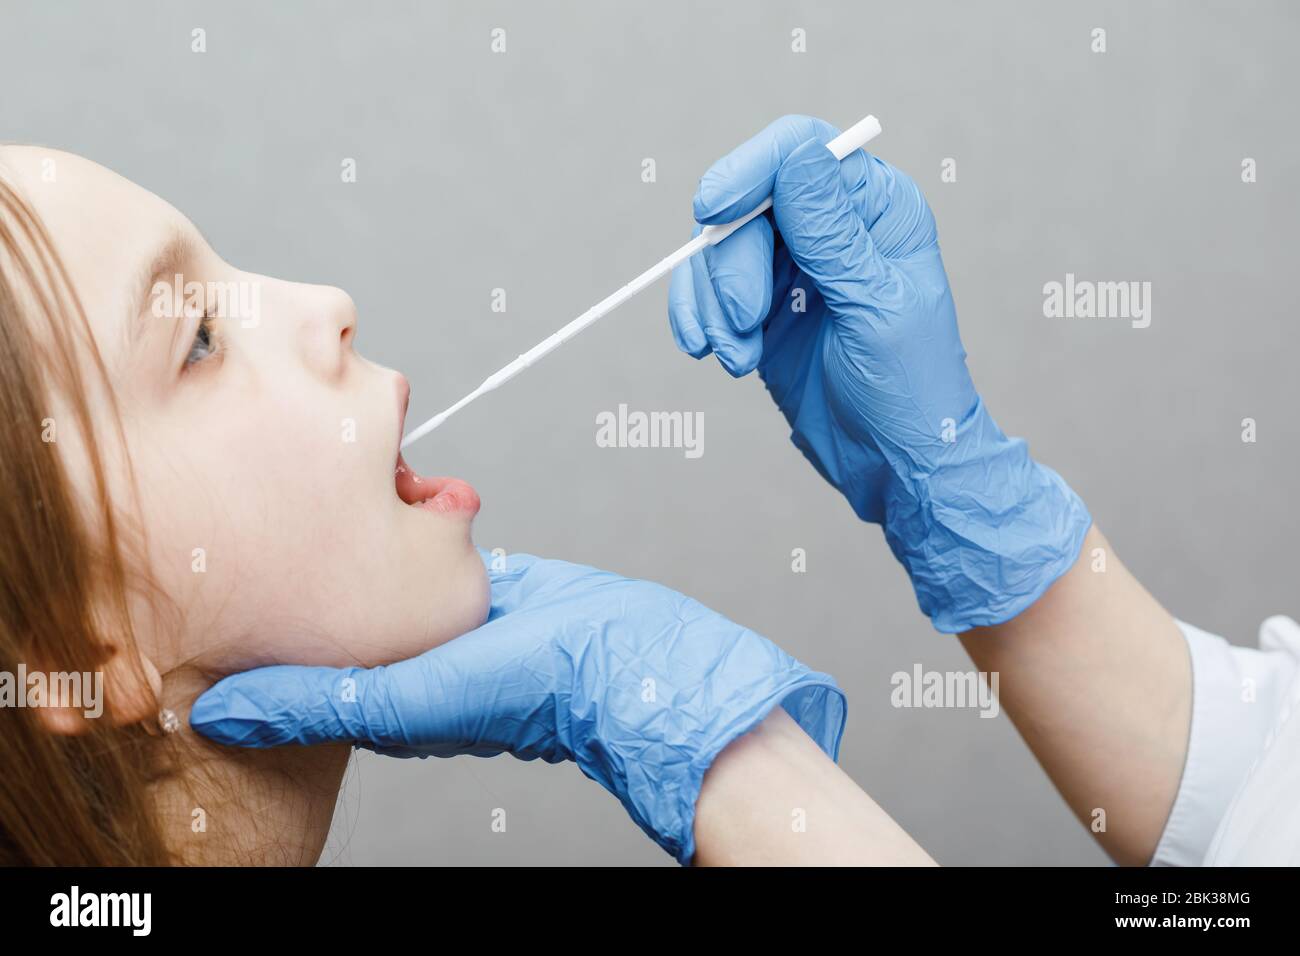 Pediatrician taking saliva test sample from elementary age girl's mouth performing Saliva testing (Salivaomics) diagnostic procedure Stock Photo